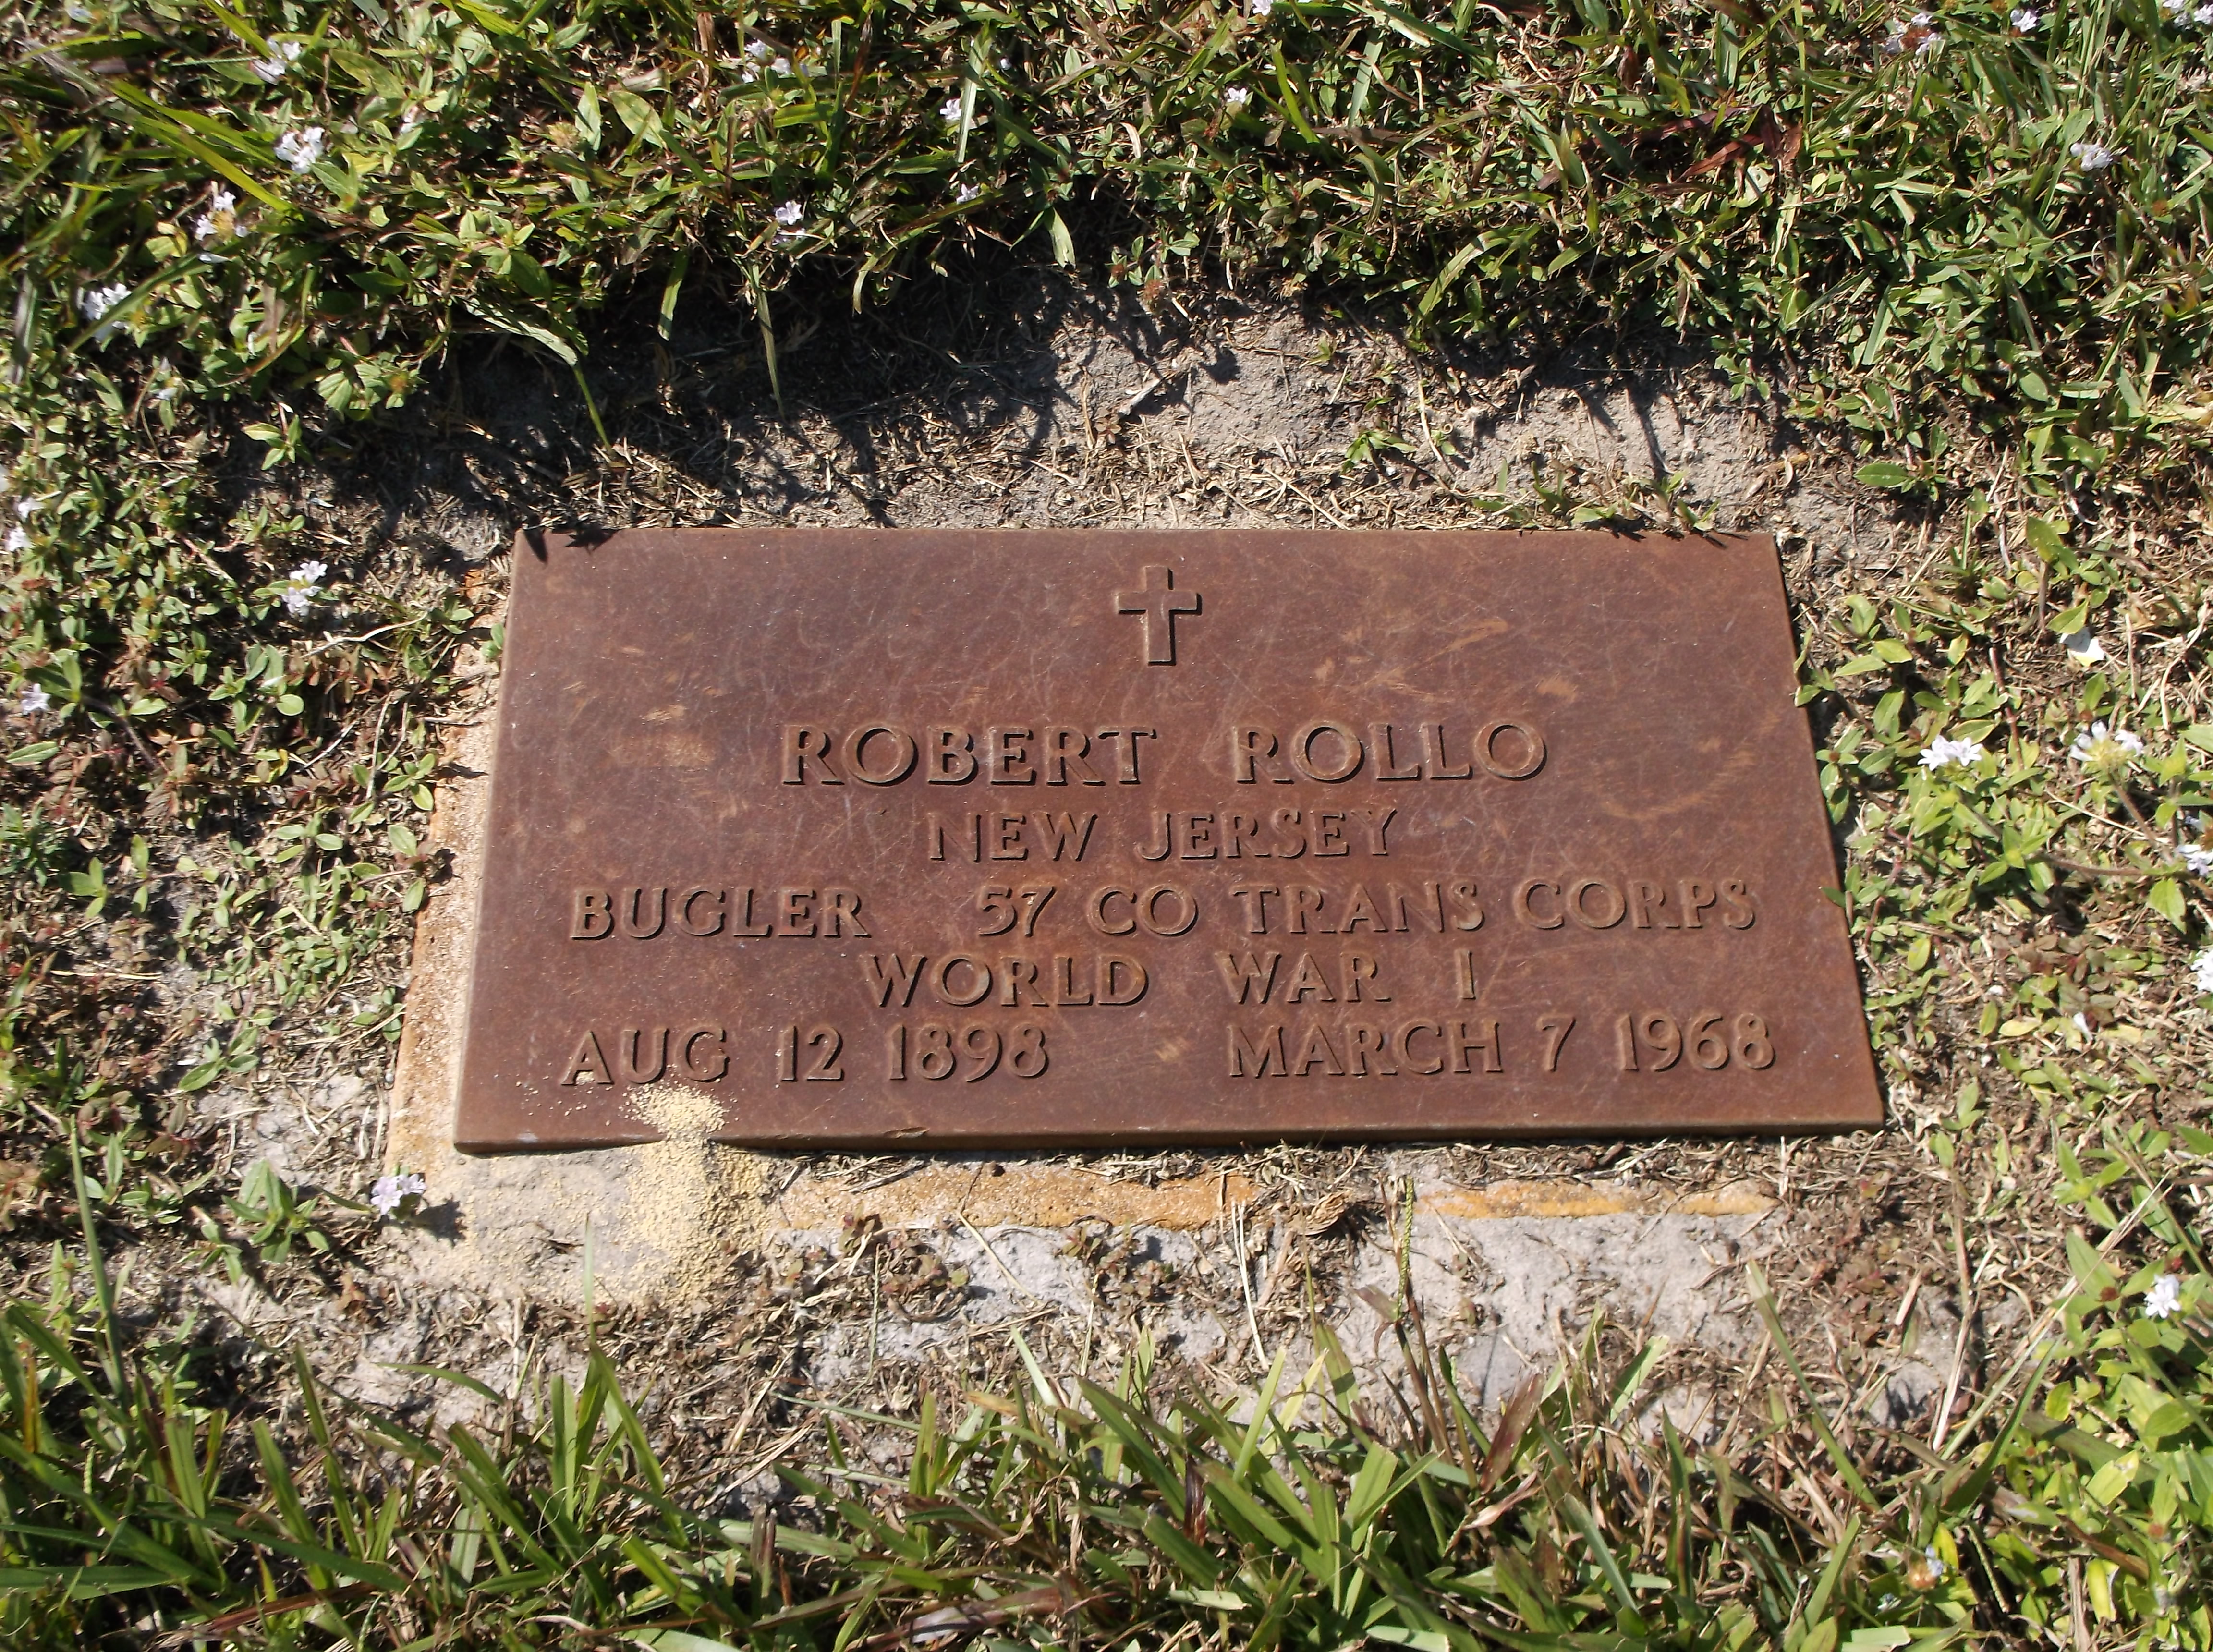 Robert Rollo